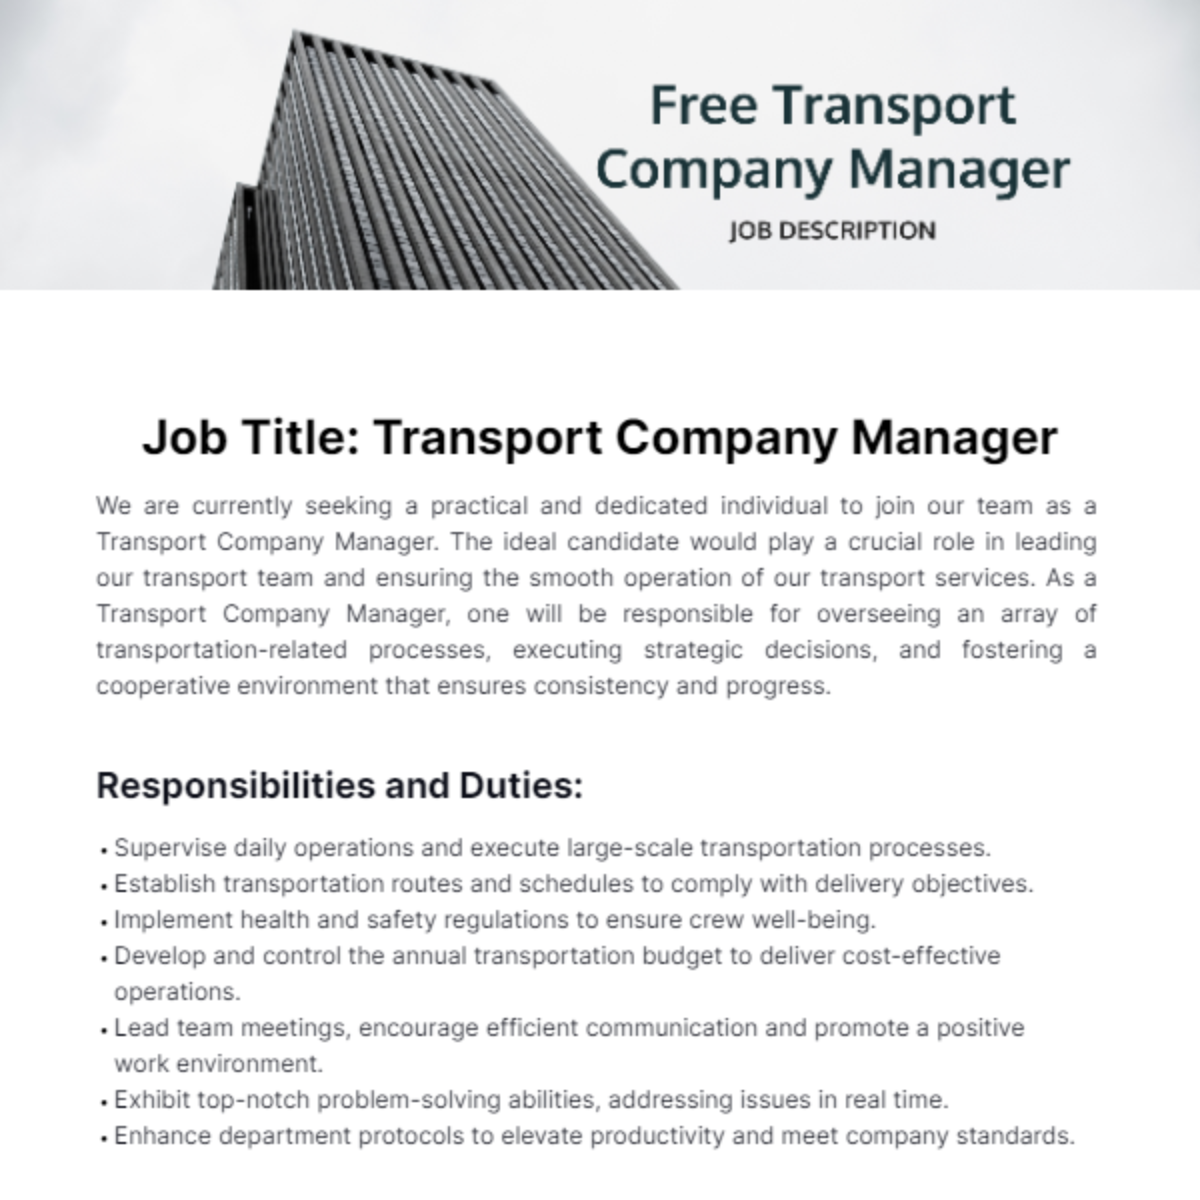 Transport Company Manager Job Description Template